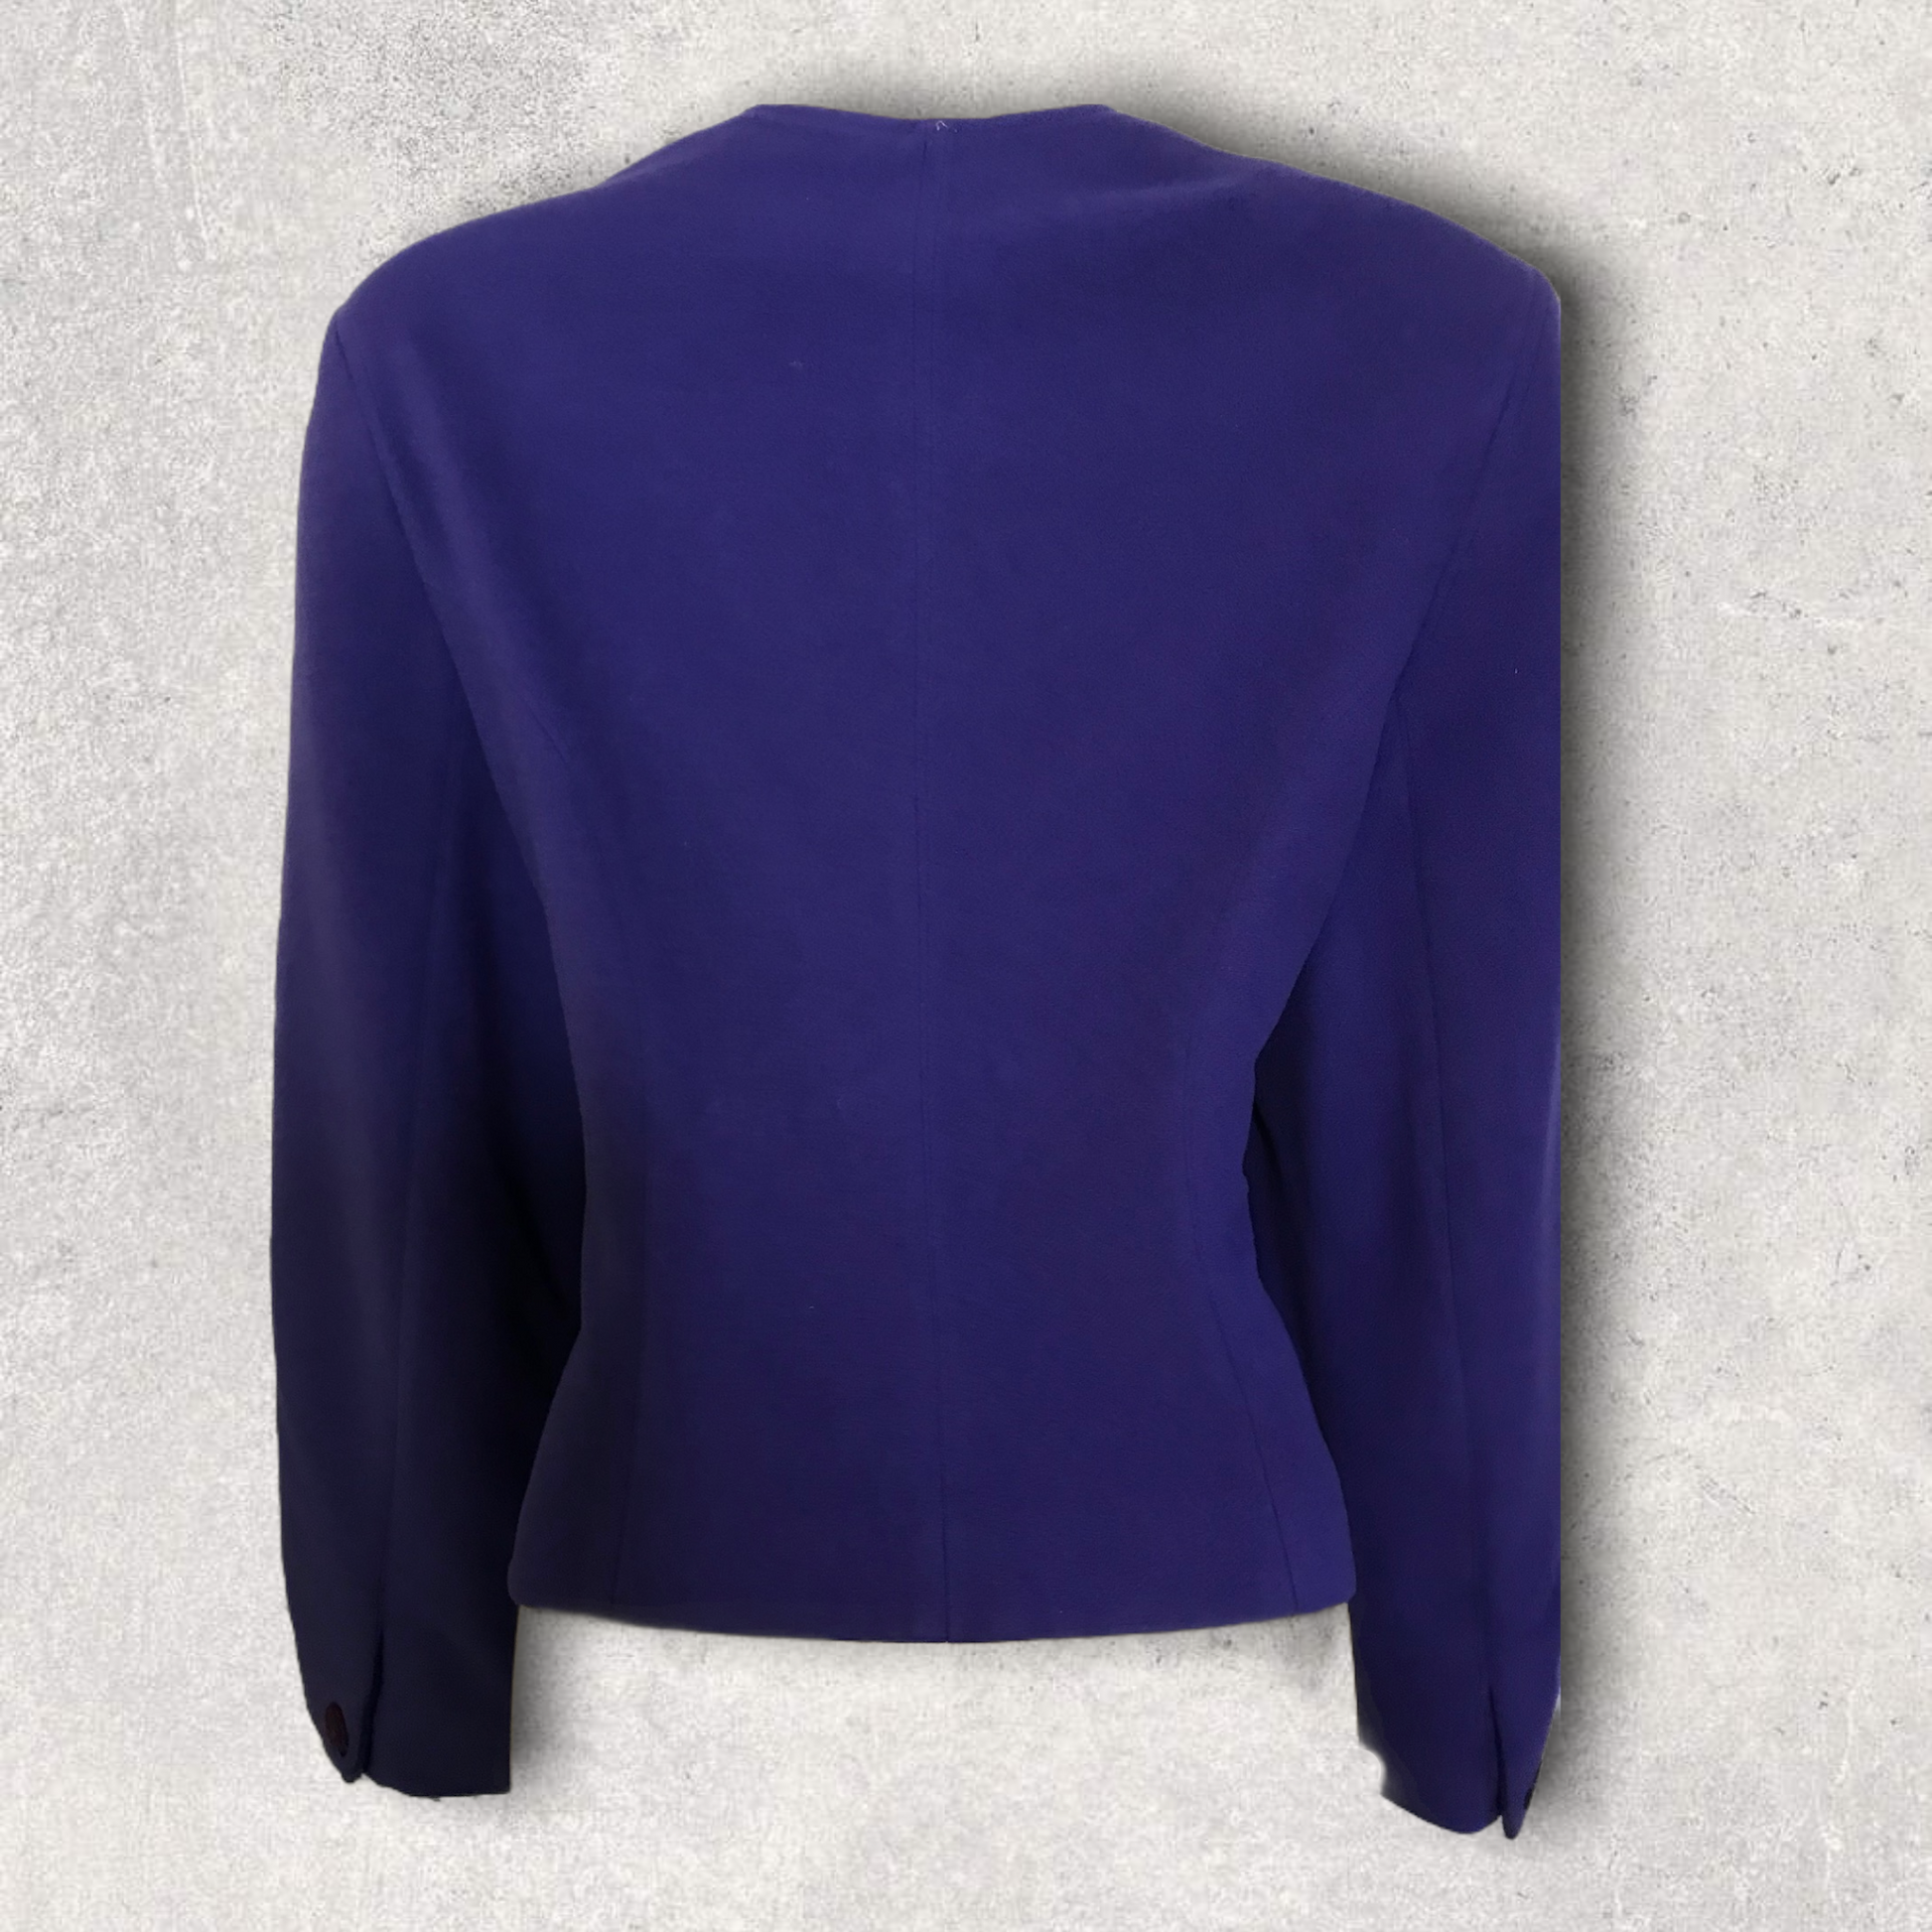 Alexon Vintage Purple Wool & Cashmere Jacket UK 10 US 6 EU 38 Timeless Fashions